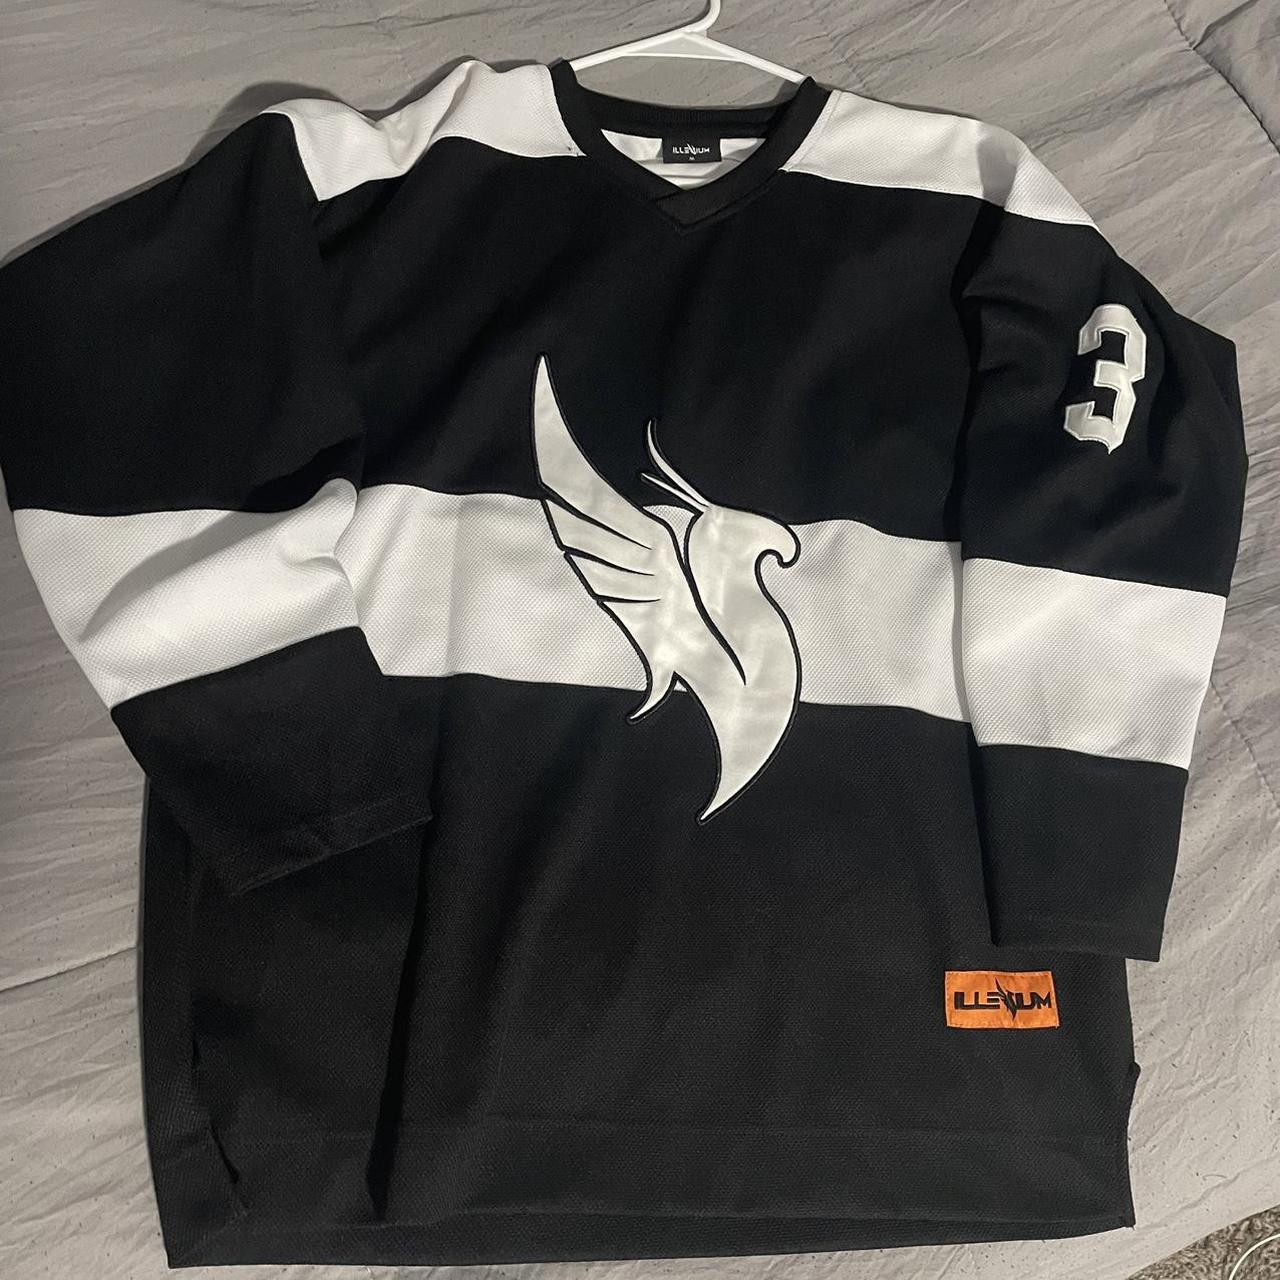 metallica hockey jersey